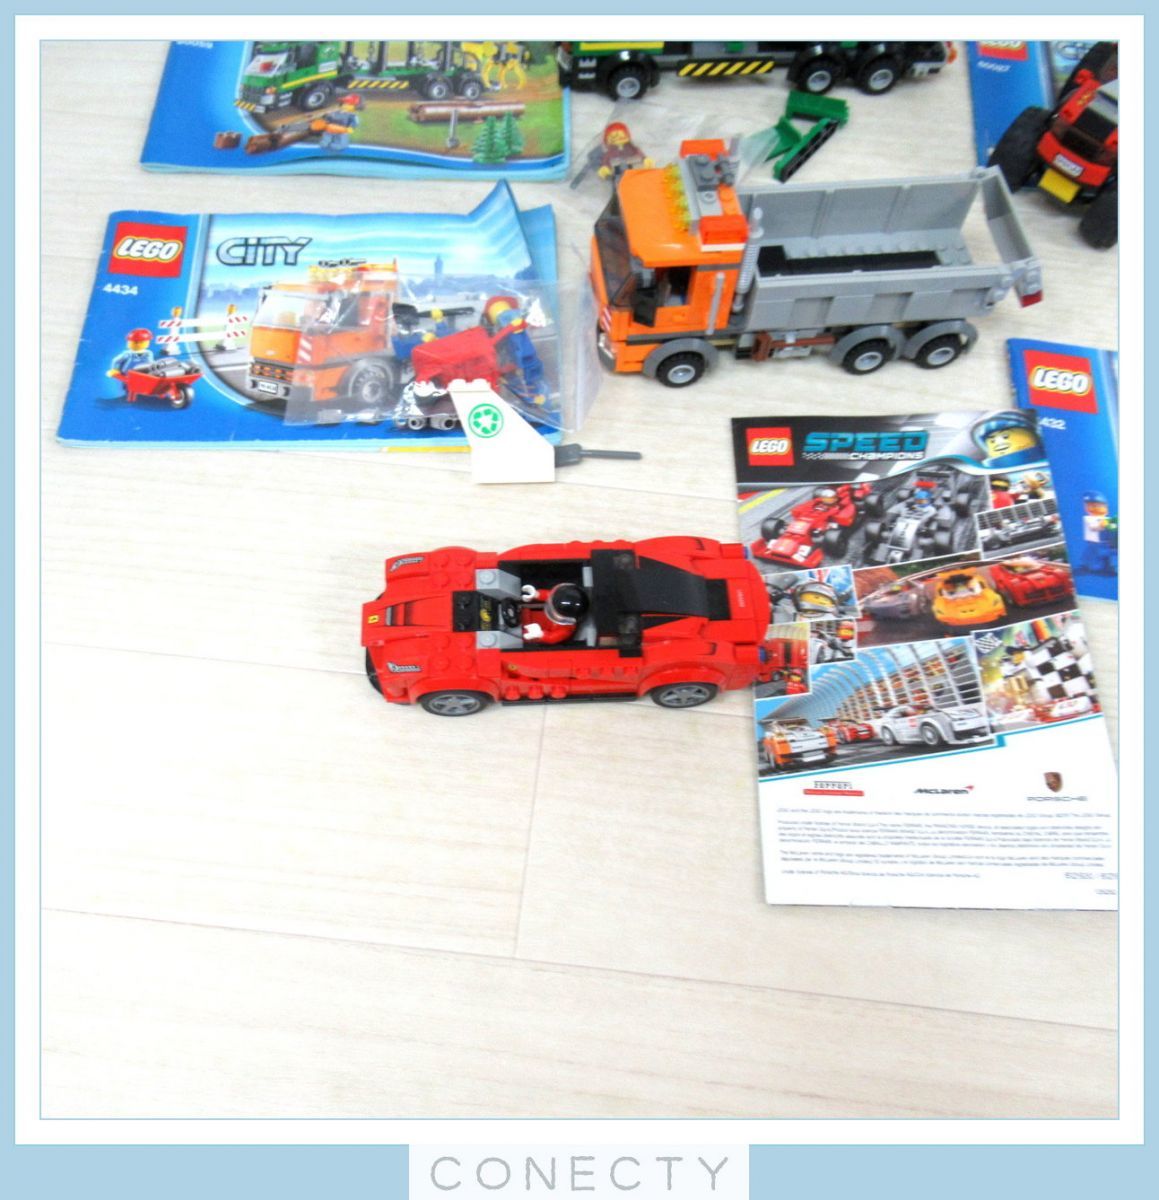 LEGO レゴ シティまとめてセット 4432 ゴミ収集車 60059 ログトラック 